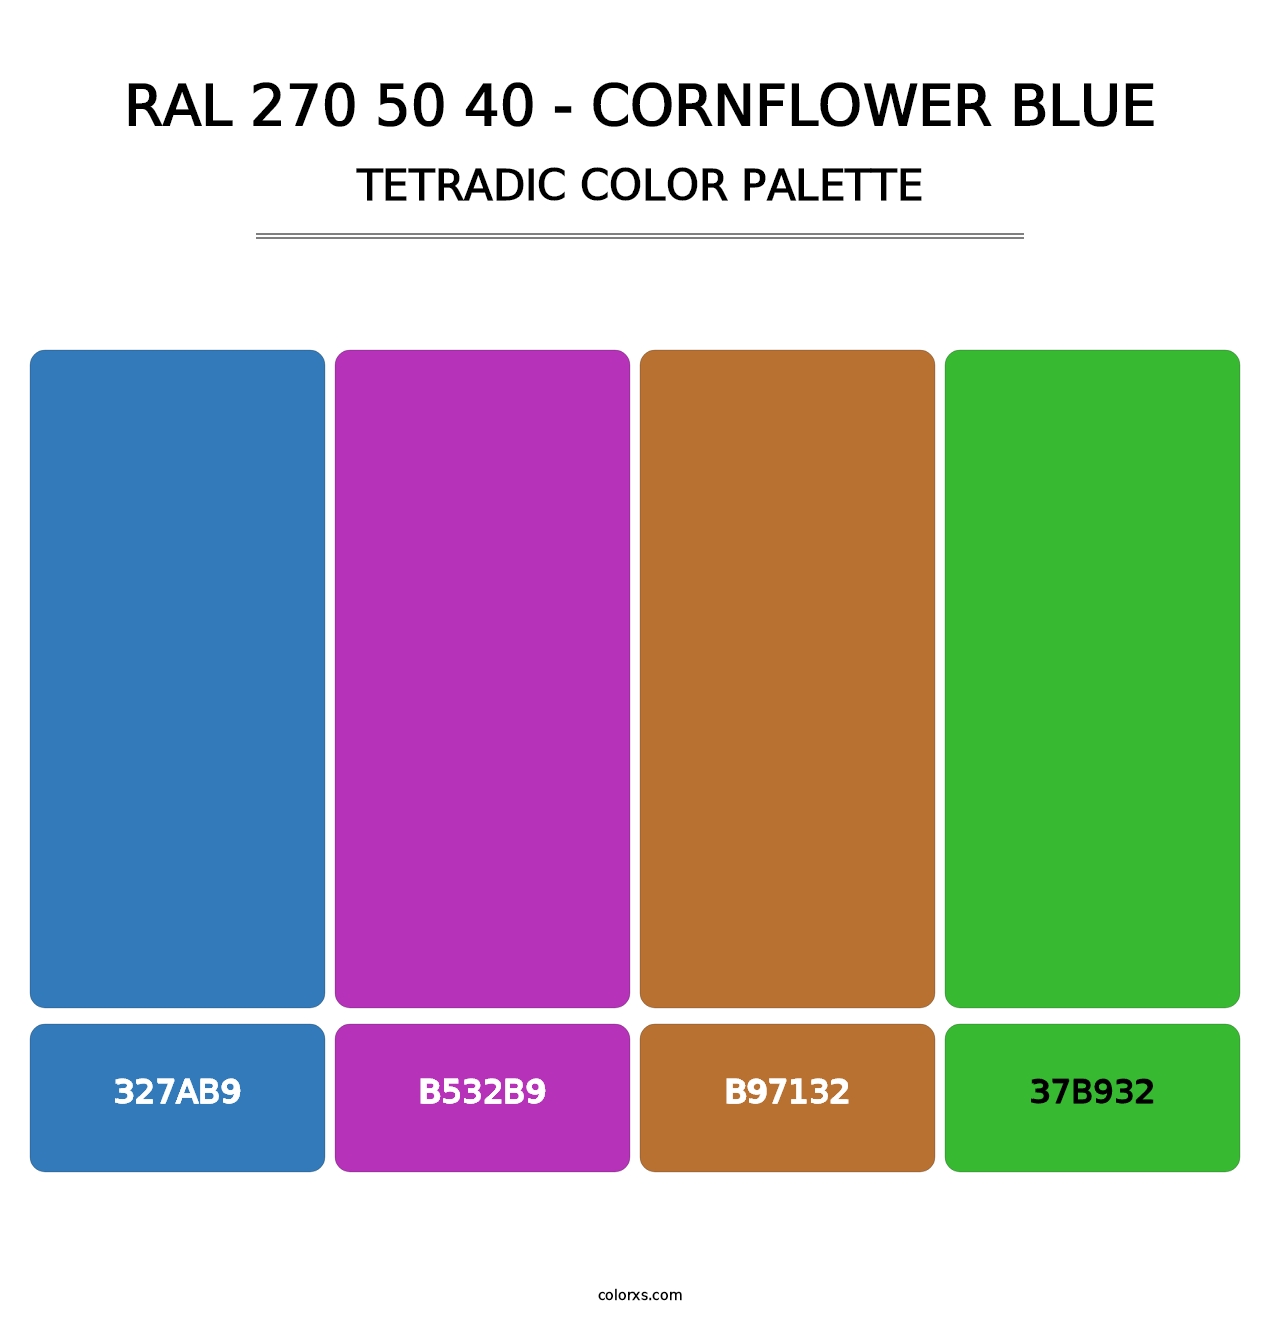 RAL 270 50 40 - Cornflower Blue - Tetradic Color Palette